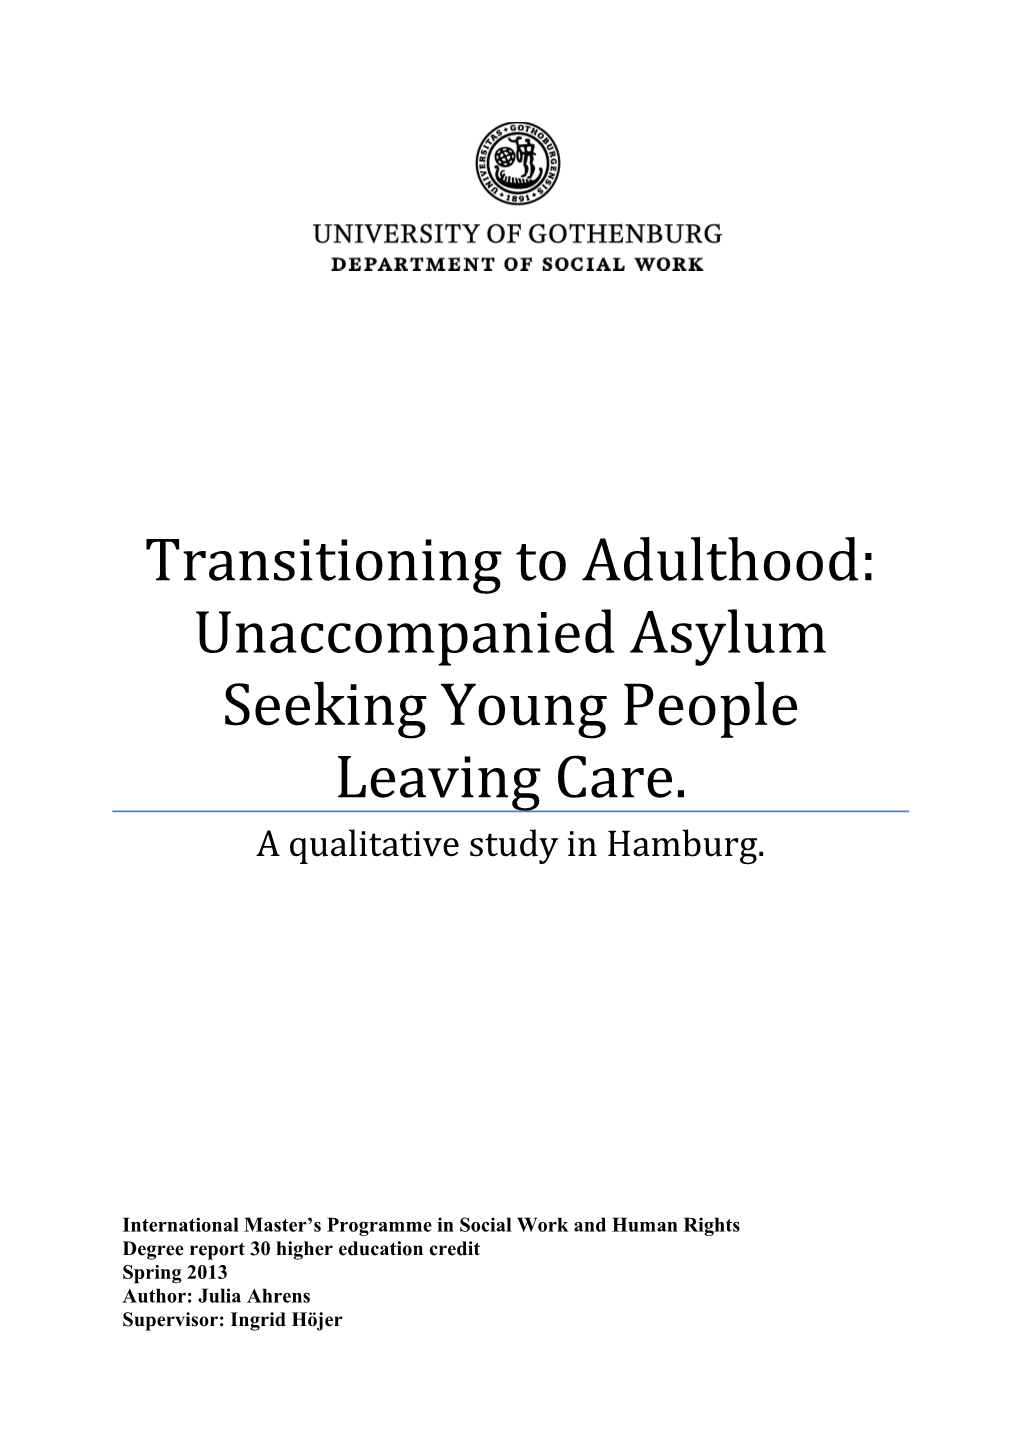 Transitioning to Adulthood: Unaccompanied Asylum Seeking Young People Leaving Care